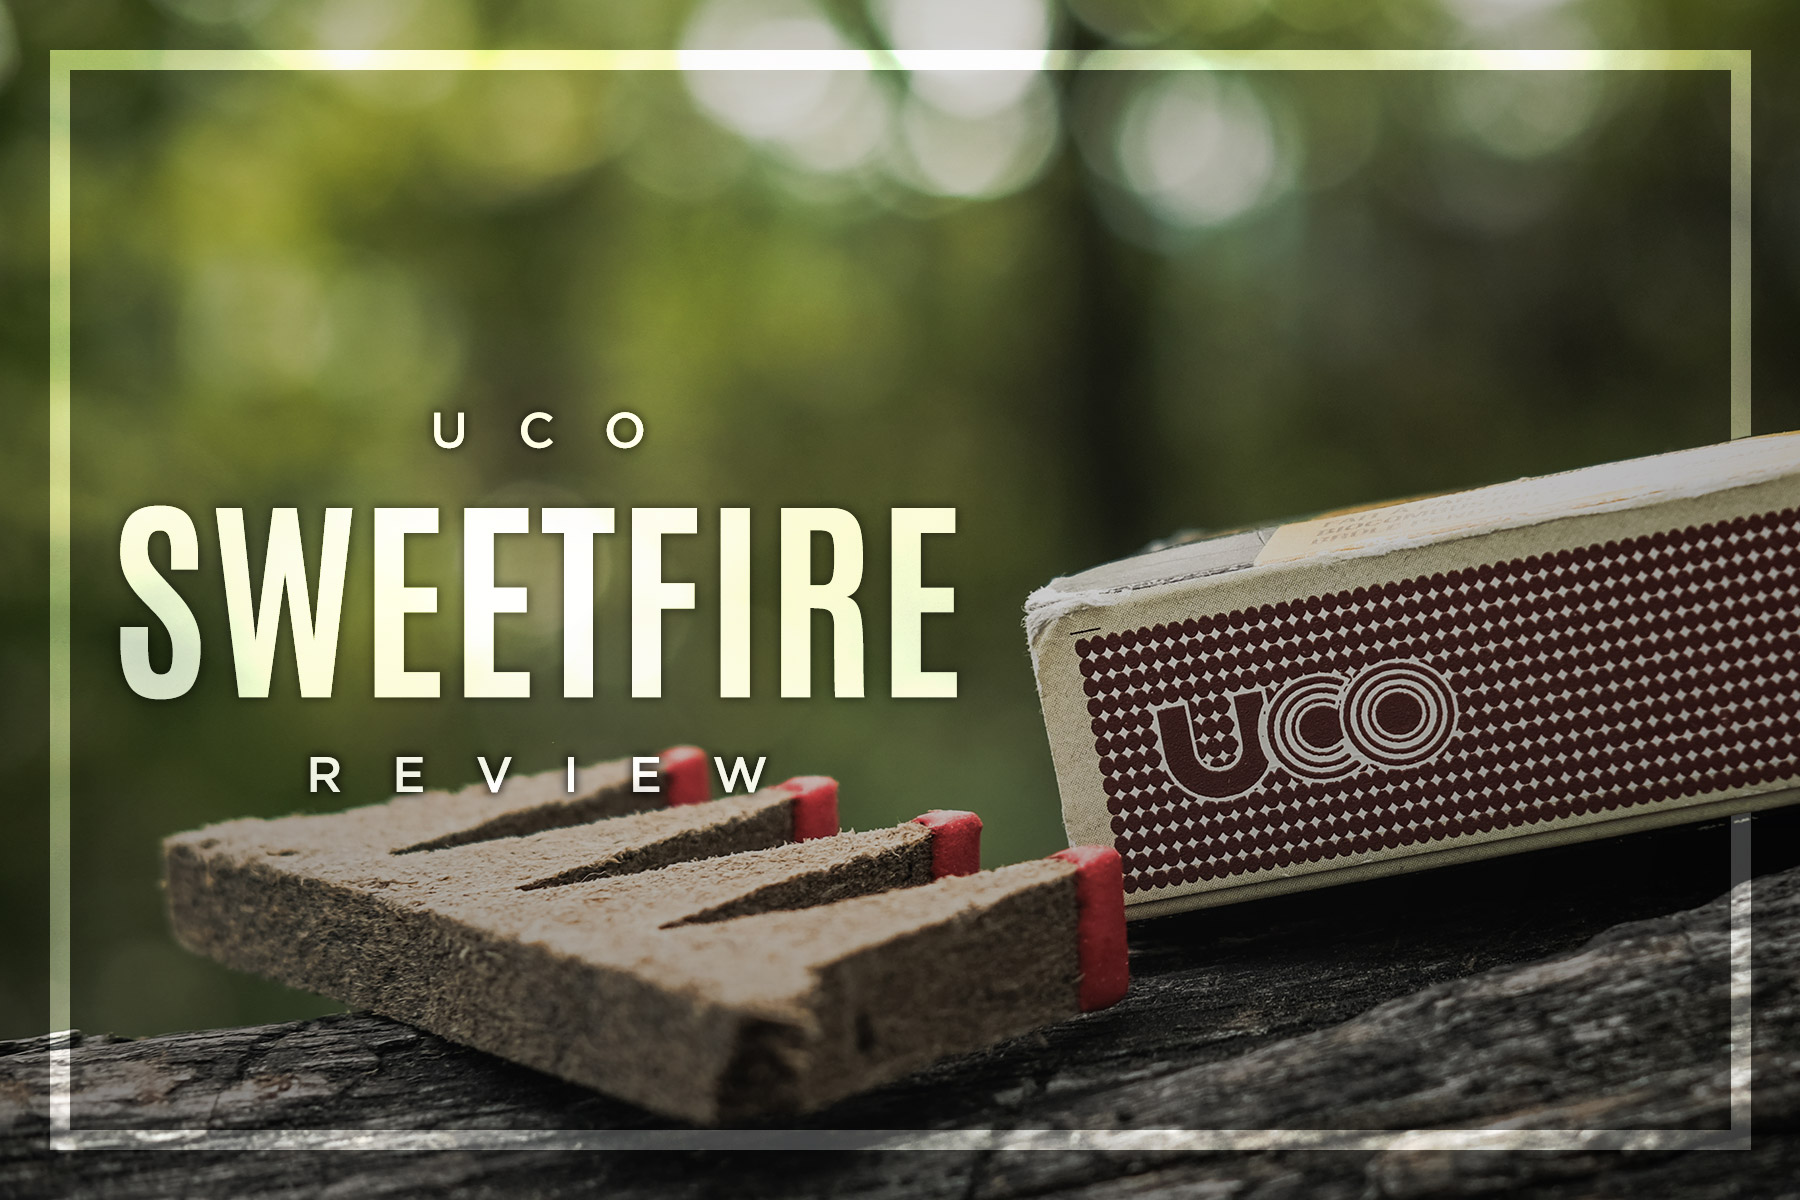 Обзор устройства для запуска огня UCO Sweetfire